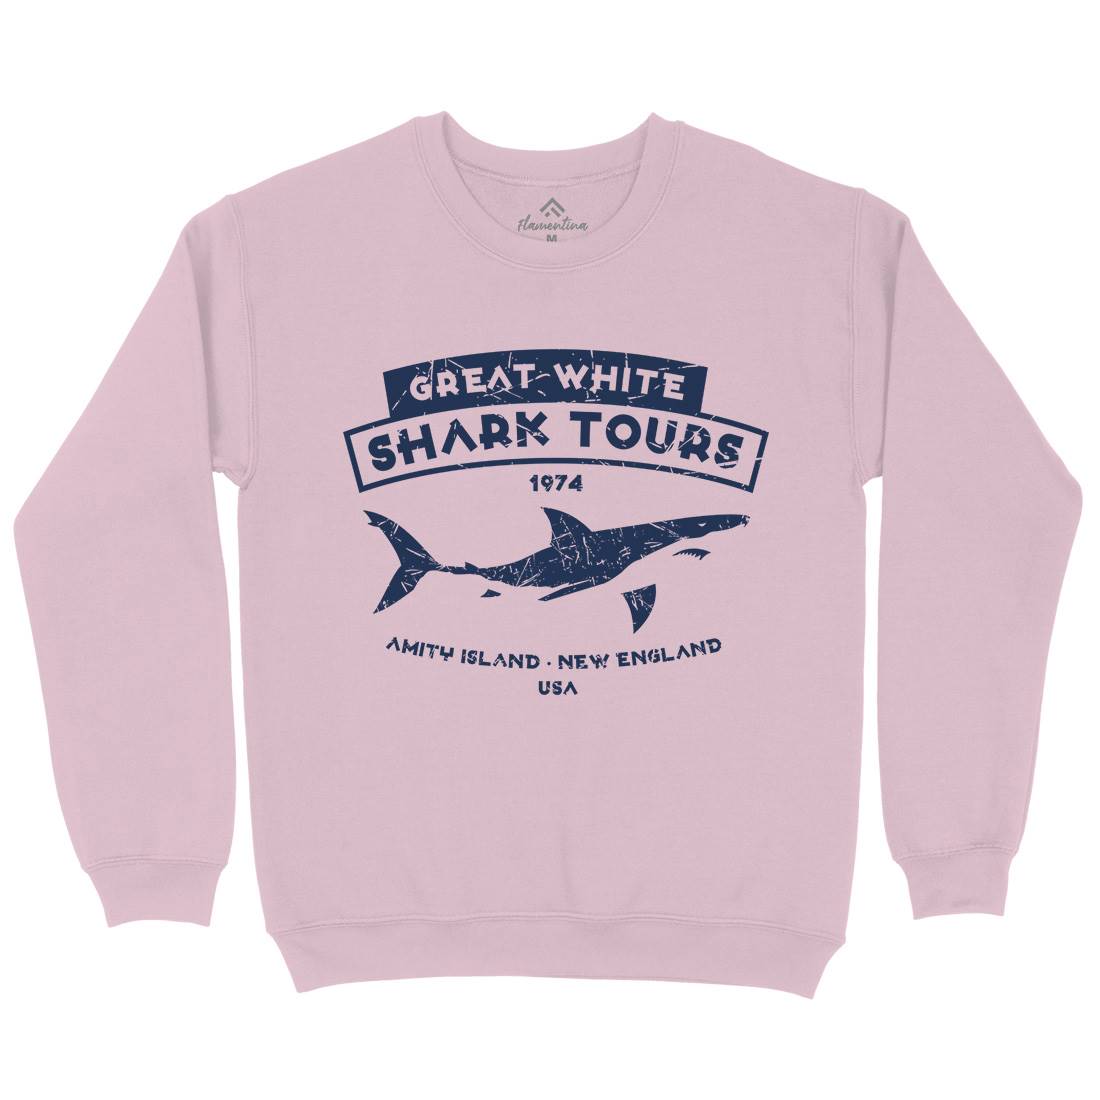 Great White Shark Tours Kids Crew Neck Sweatshirt Navy D348